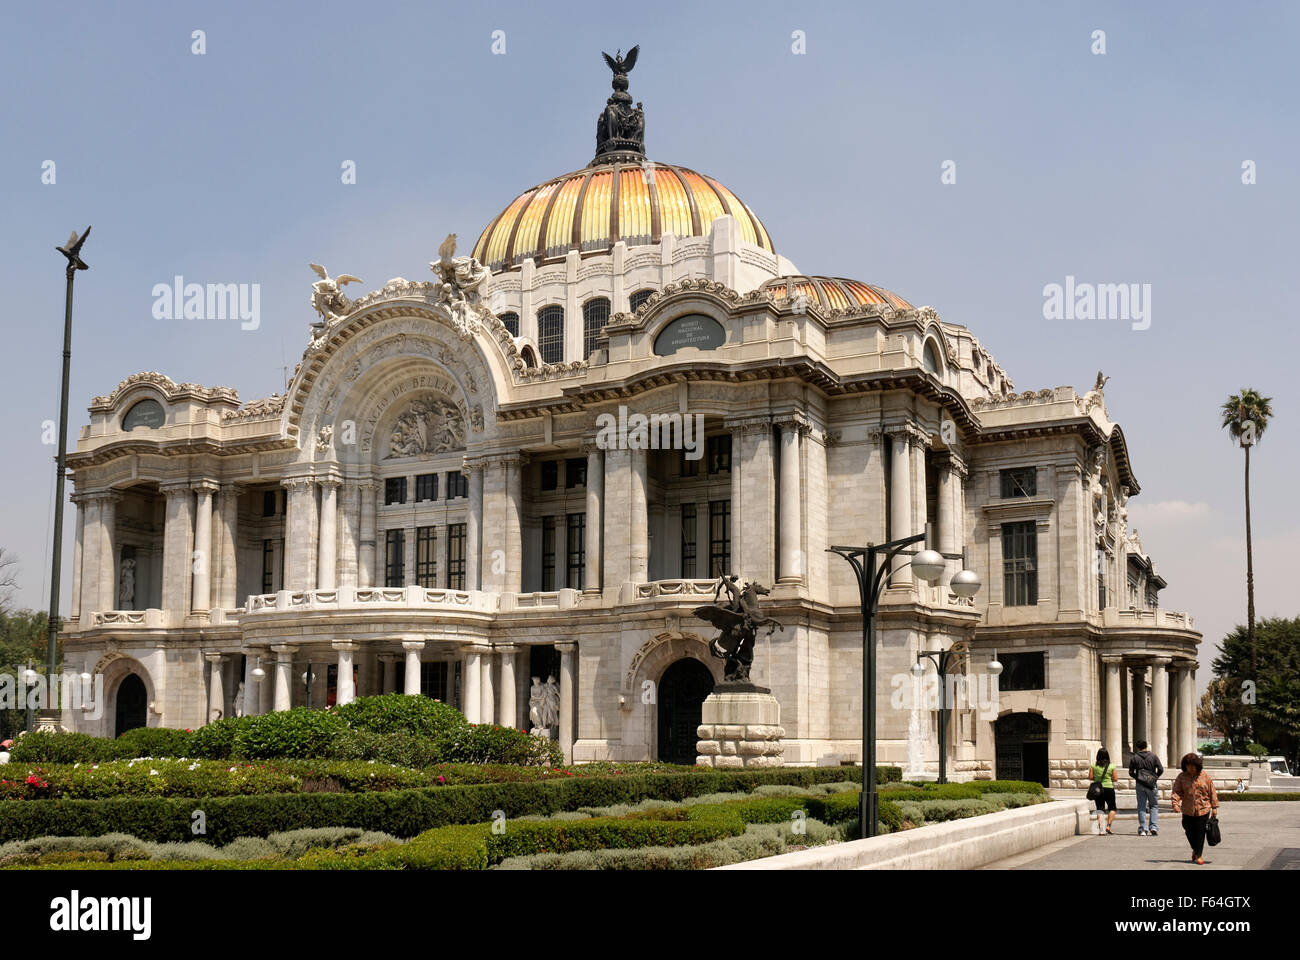 The Art Nouveau and Art Deco Palacio de Bellas Artes or Palace of Fine Arts in Mexico City, Mexico Stock Photo